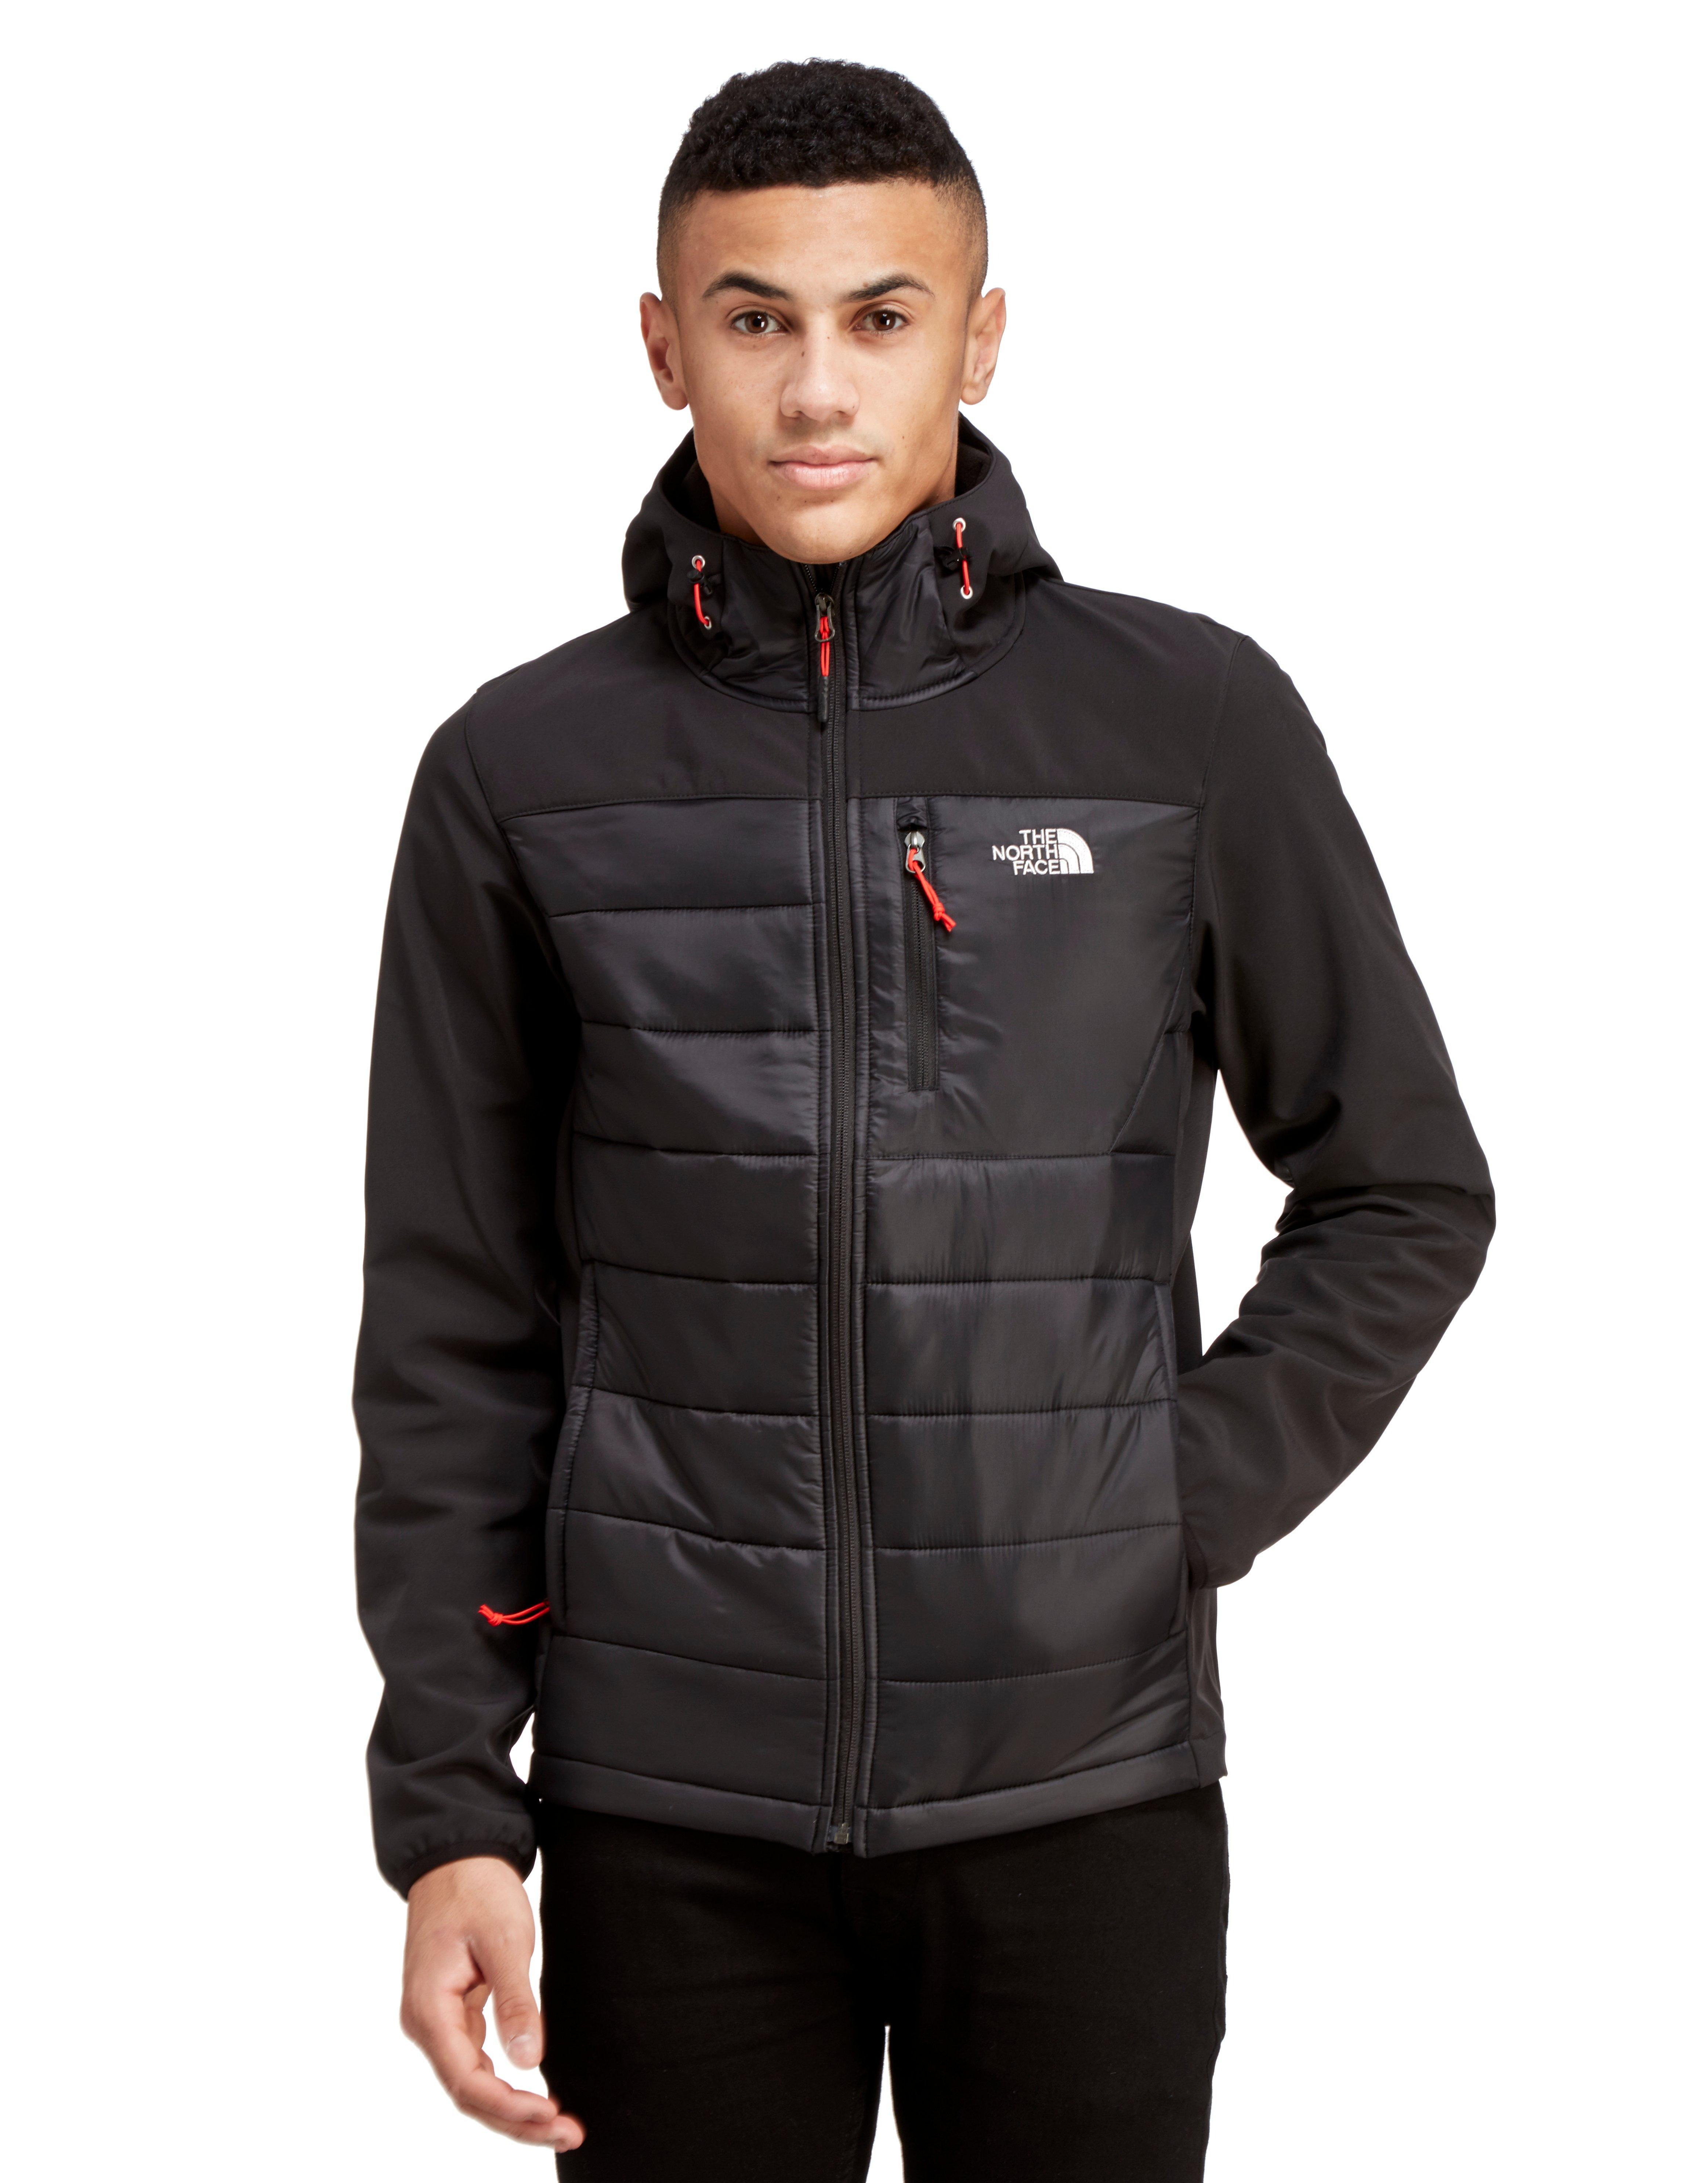 The North Face Fleece Aconcagua Hybrid Jacket in Black for Men - Lyst